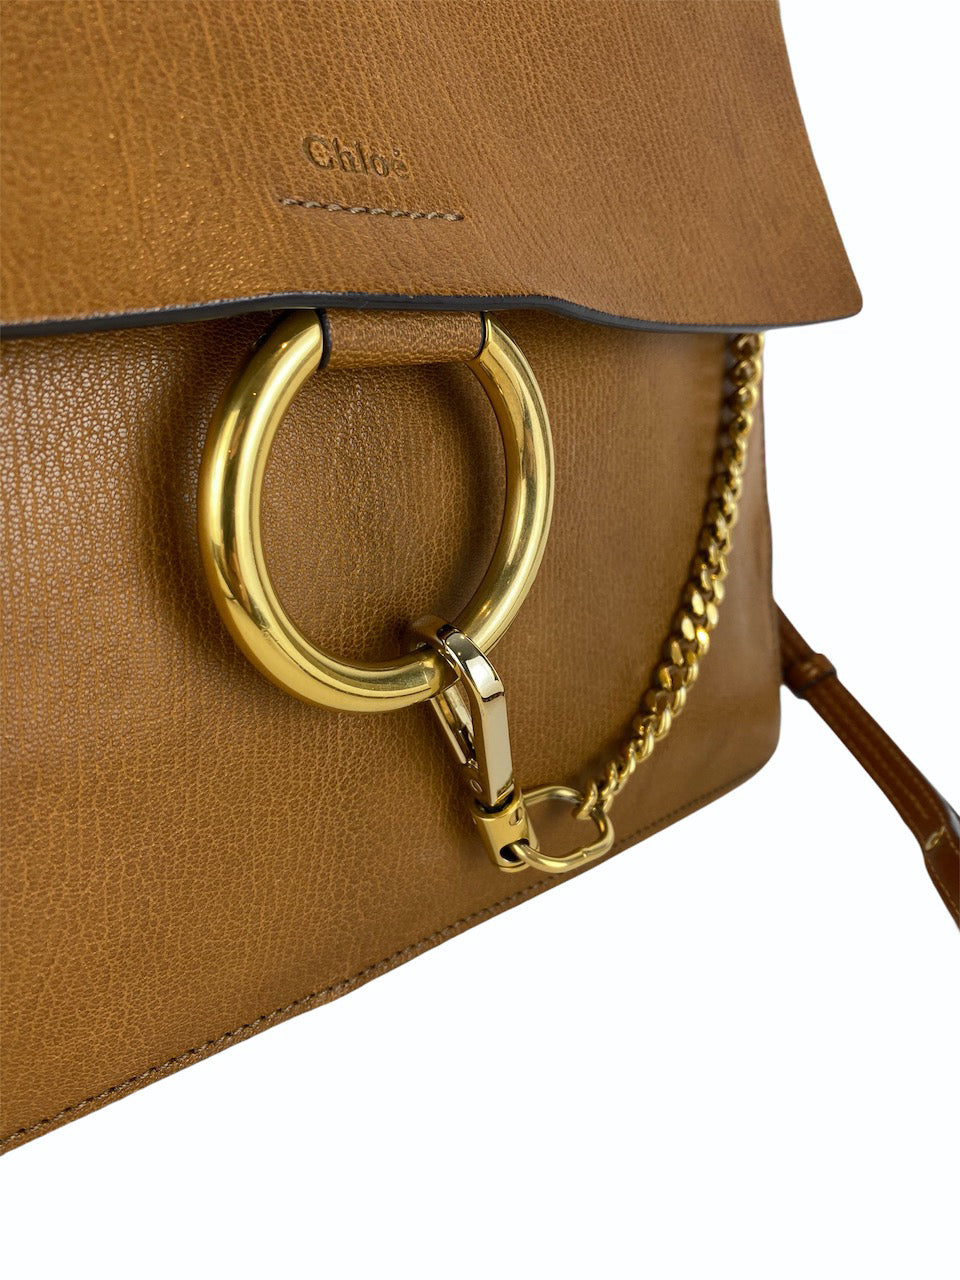 Chloe Large Caramel Leather "Faye" Shouler Bag - Siopaella Designer Exchange